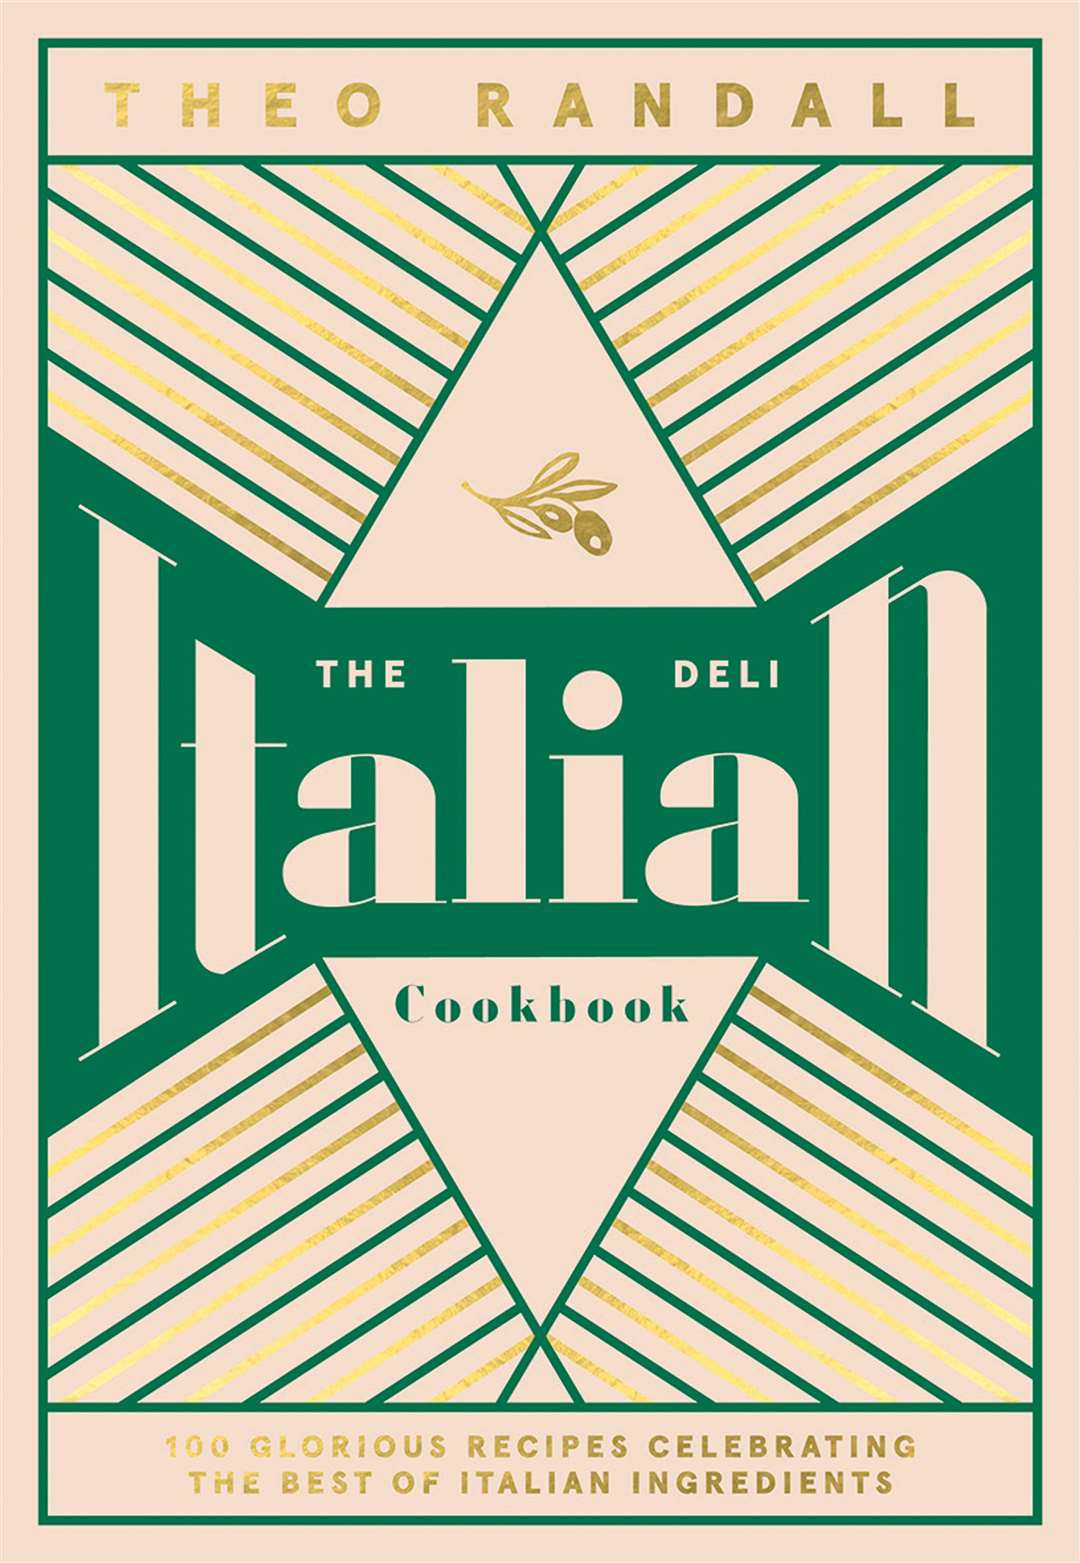 The Italian Deli Cookbook by Theo Randall (Quadrille, £26). Picture: Lizzie Mayson/PA